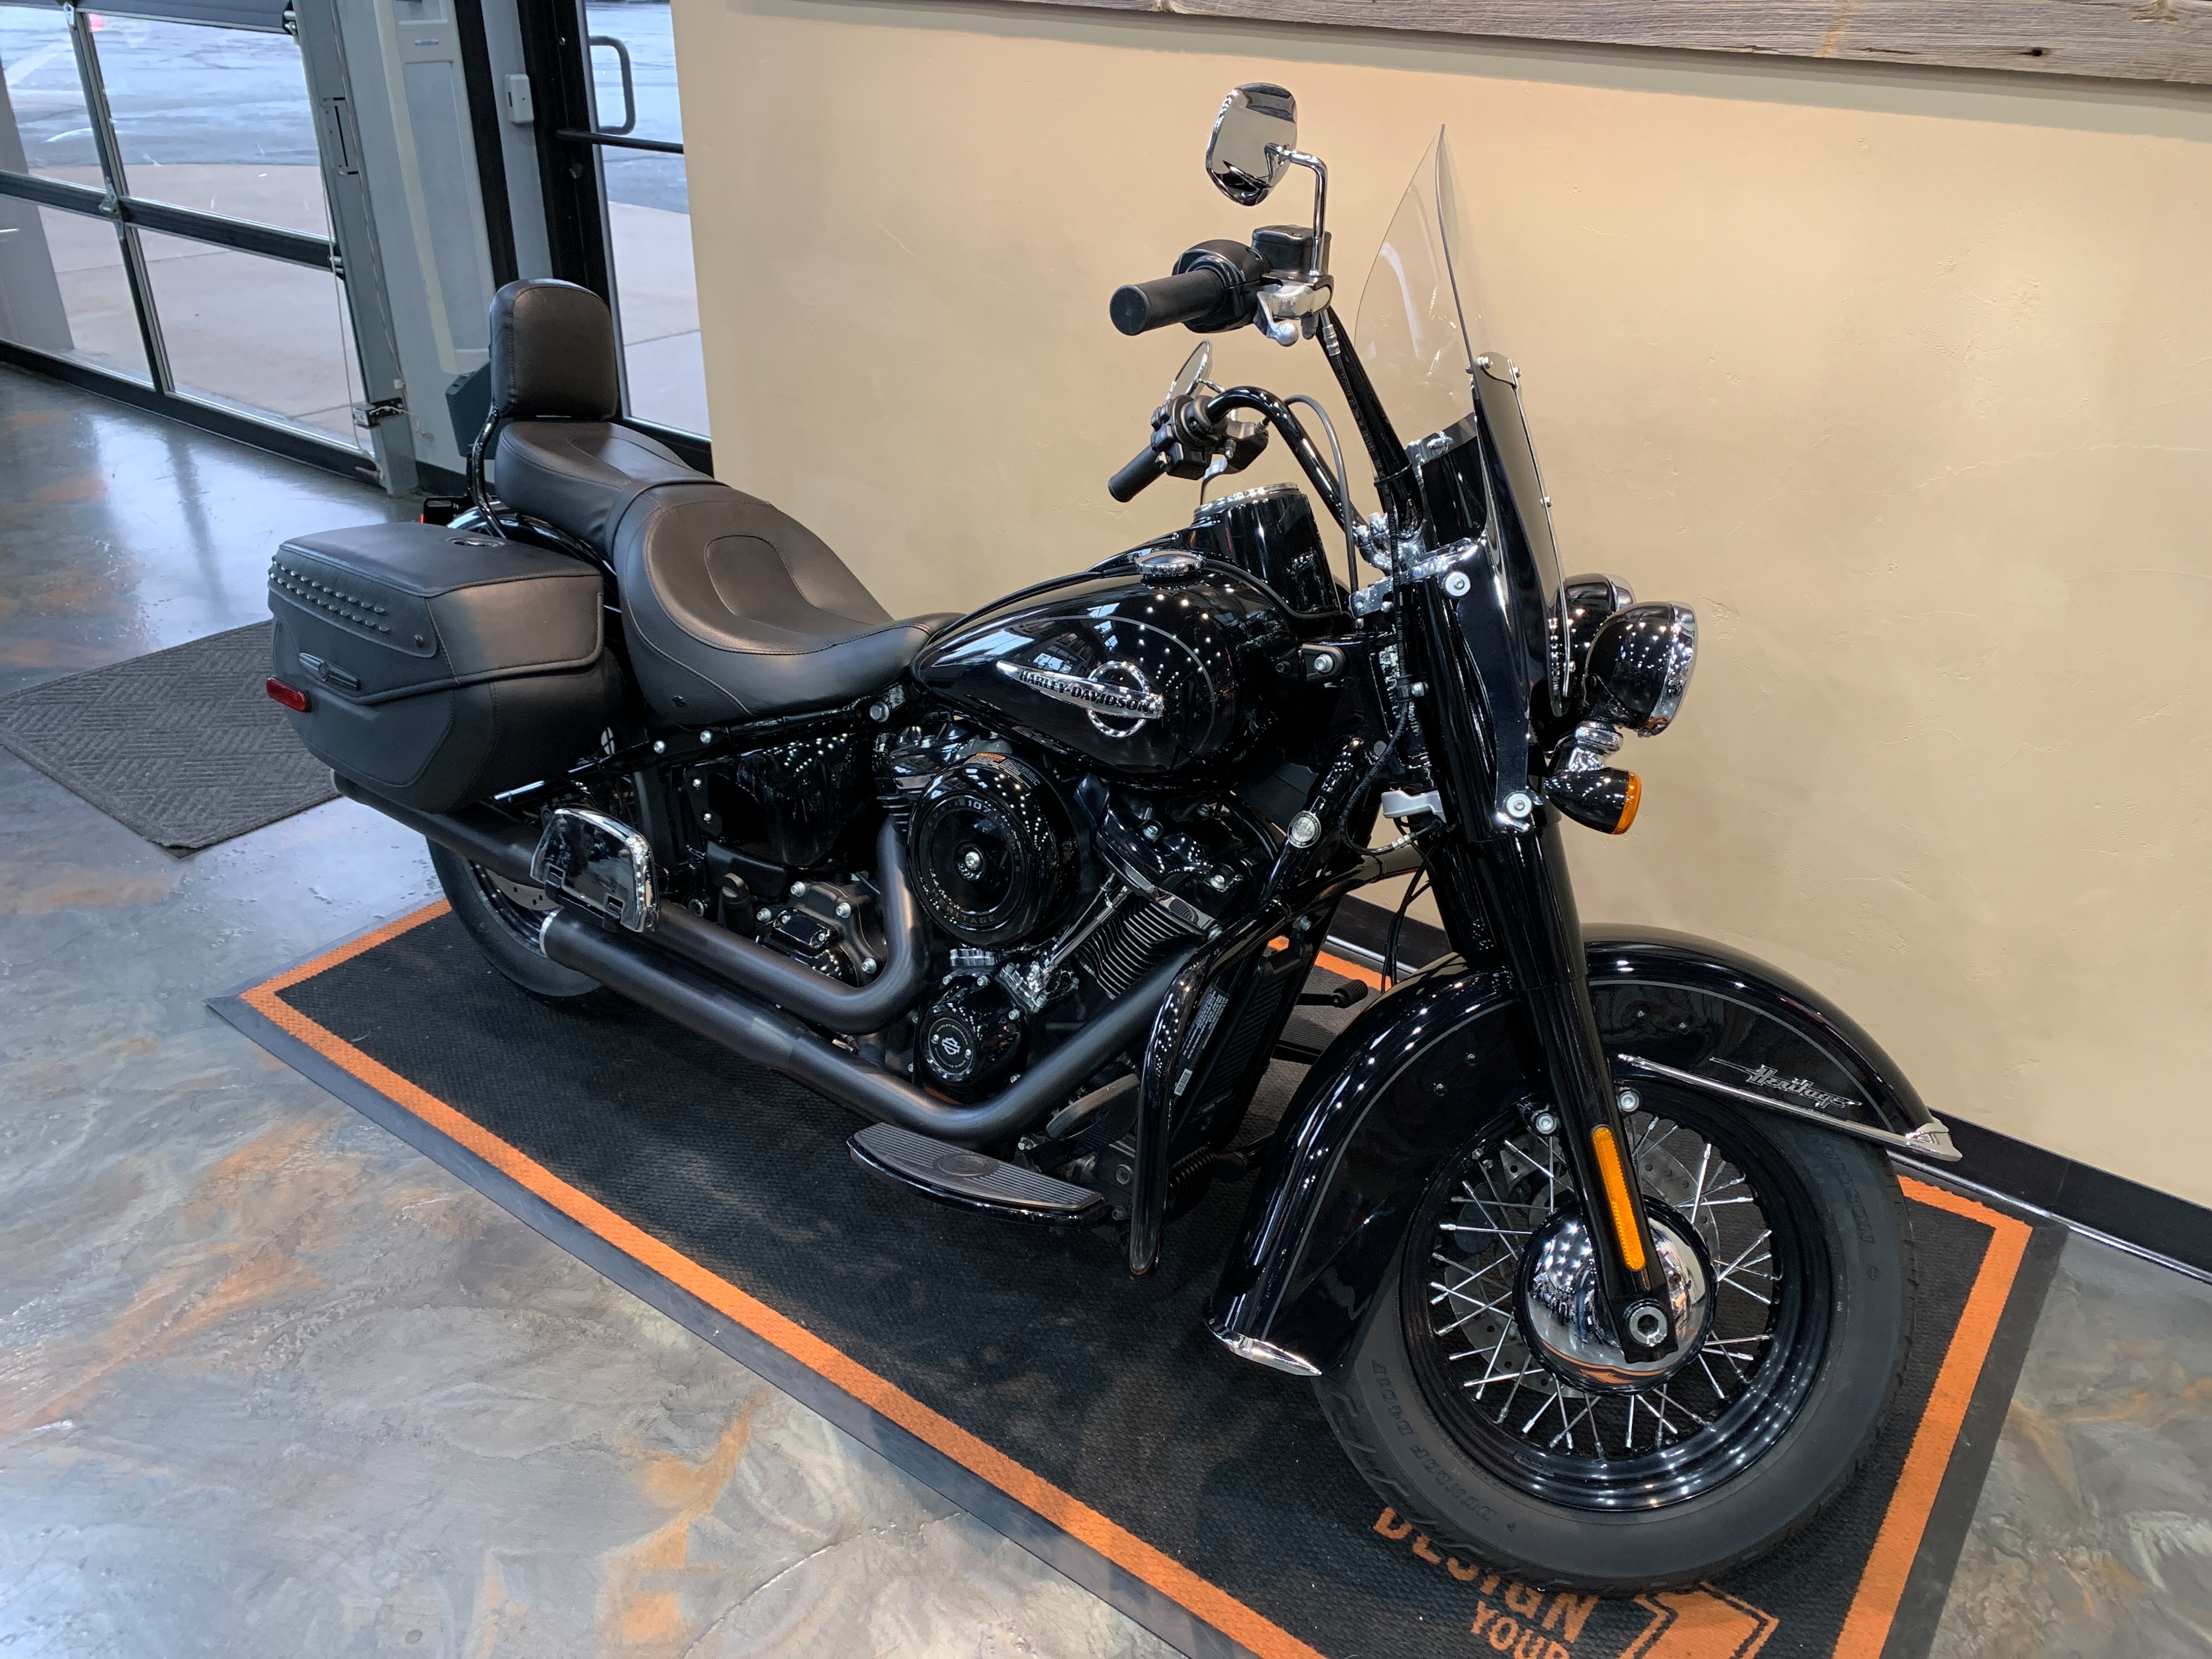 2019 Harley-Davidson Softail Heritage Classic at Vandervest Harley-Davidson, Green Bay, WI 54303